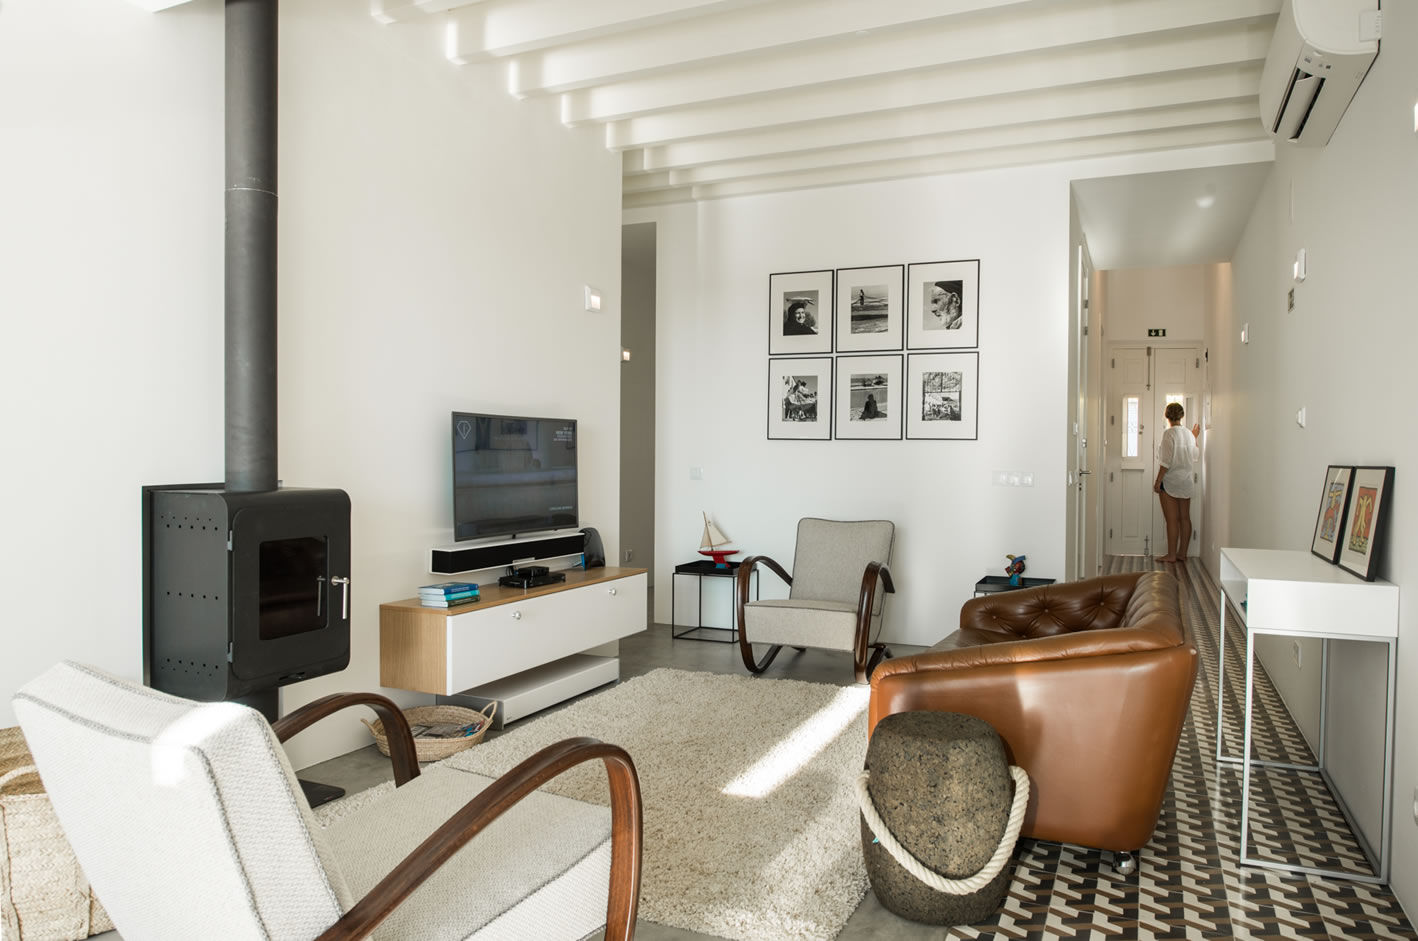 Livingroom StudioArte Minimalistyczny salon living,vintage furniture,tiles